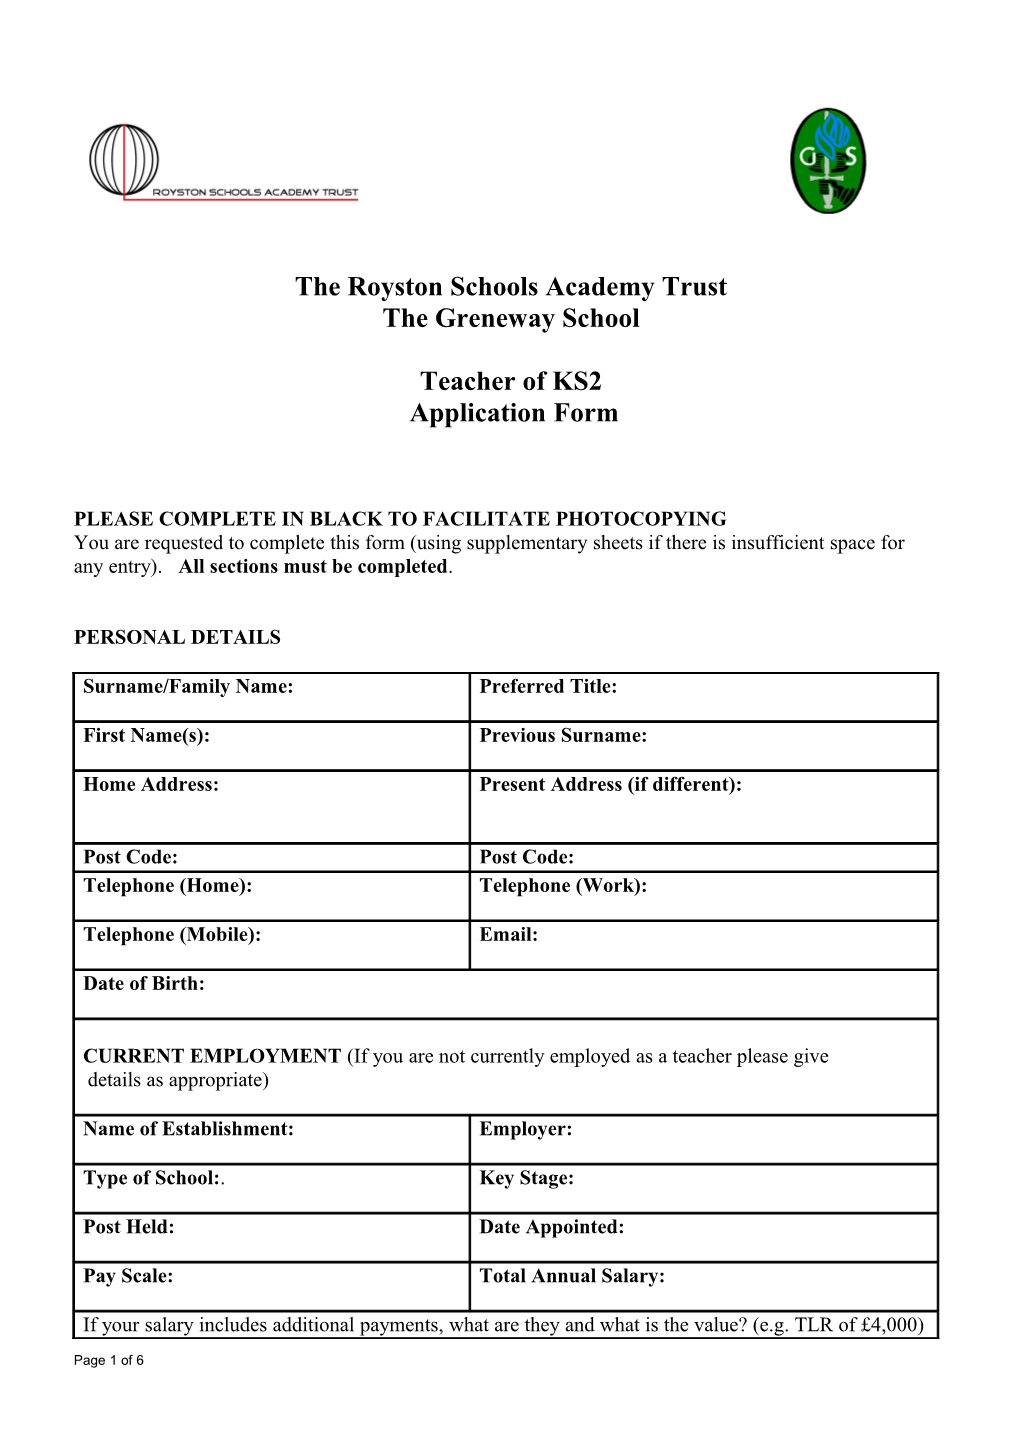 The Royston Schools Academy Trust s1